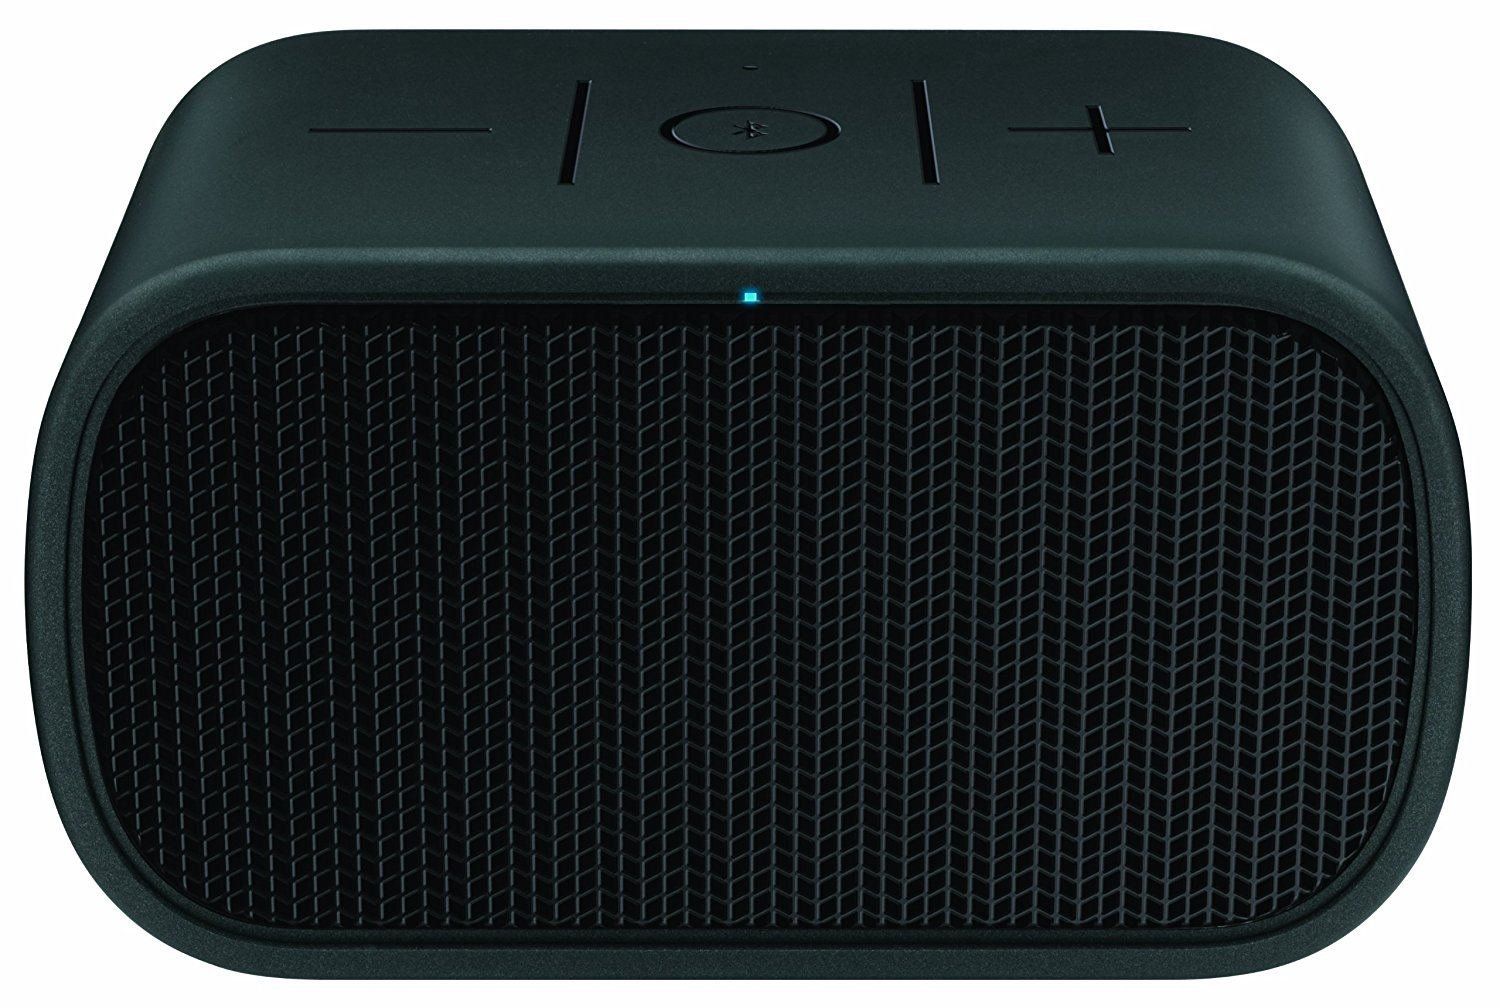 Logitech UE Mini Boom Bluetooth Speaker Review